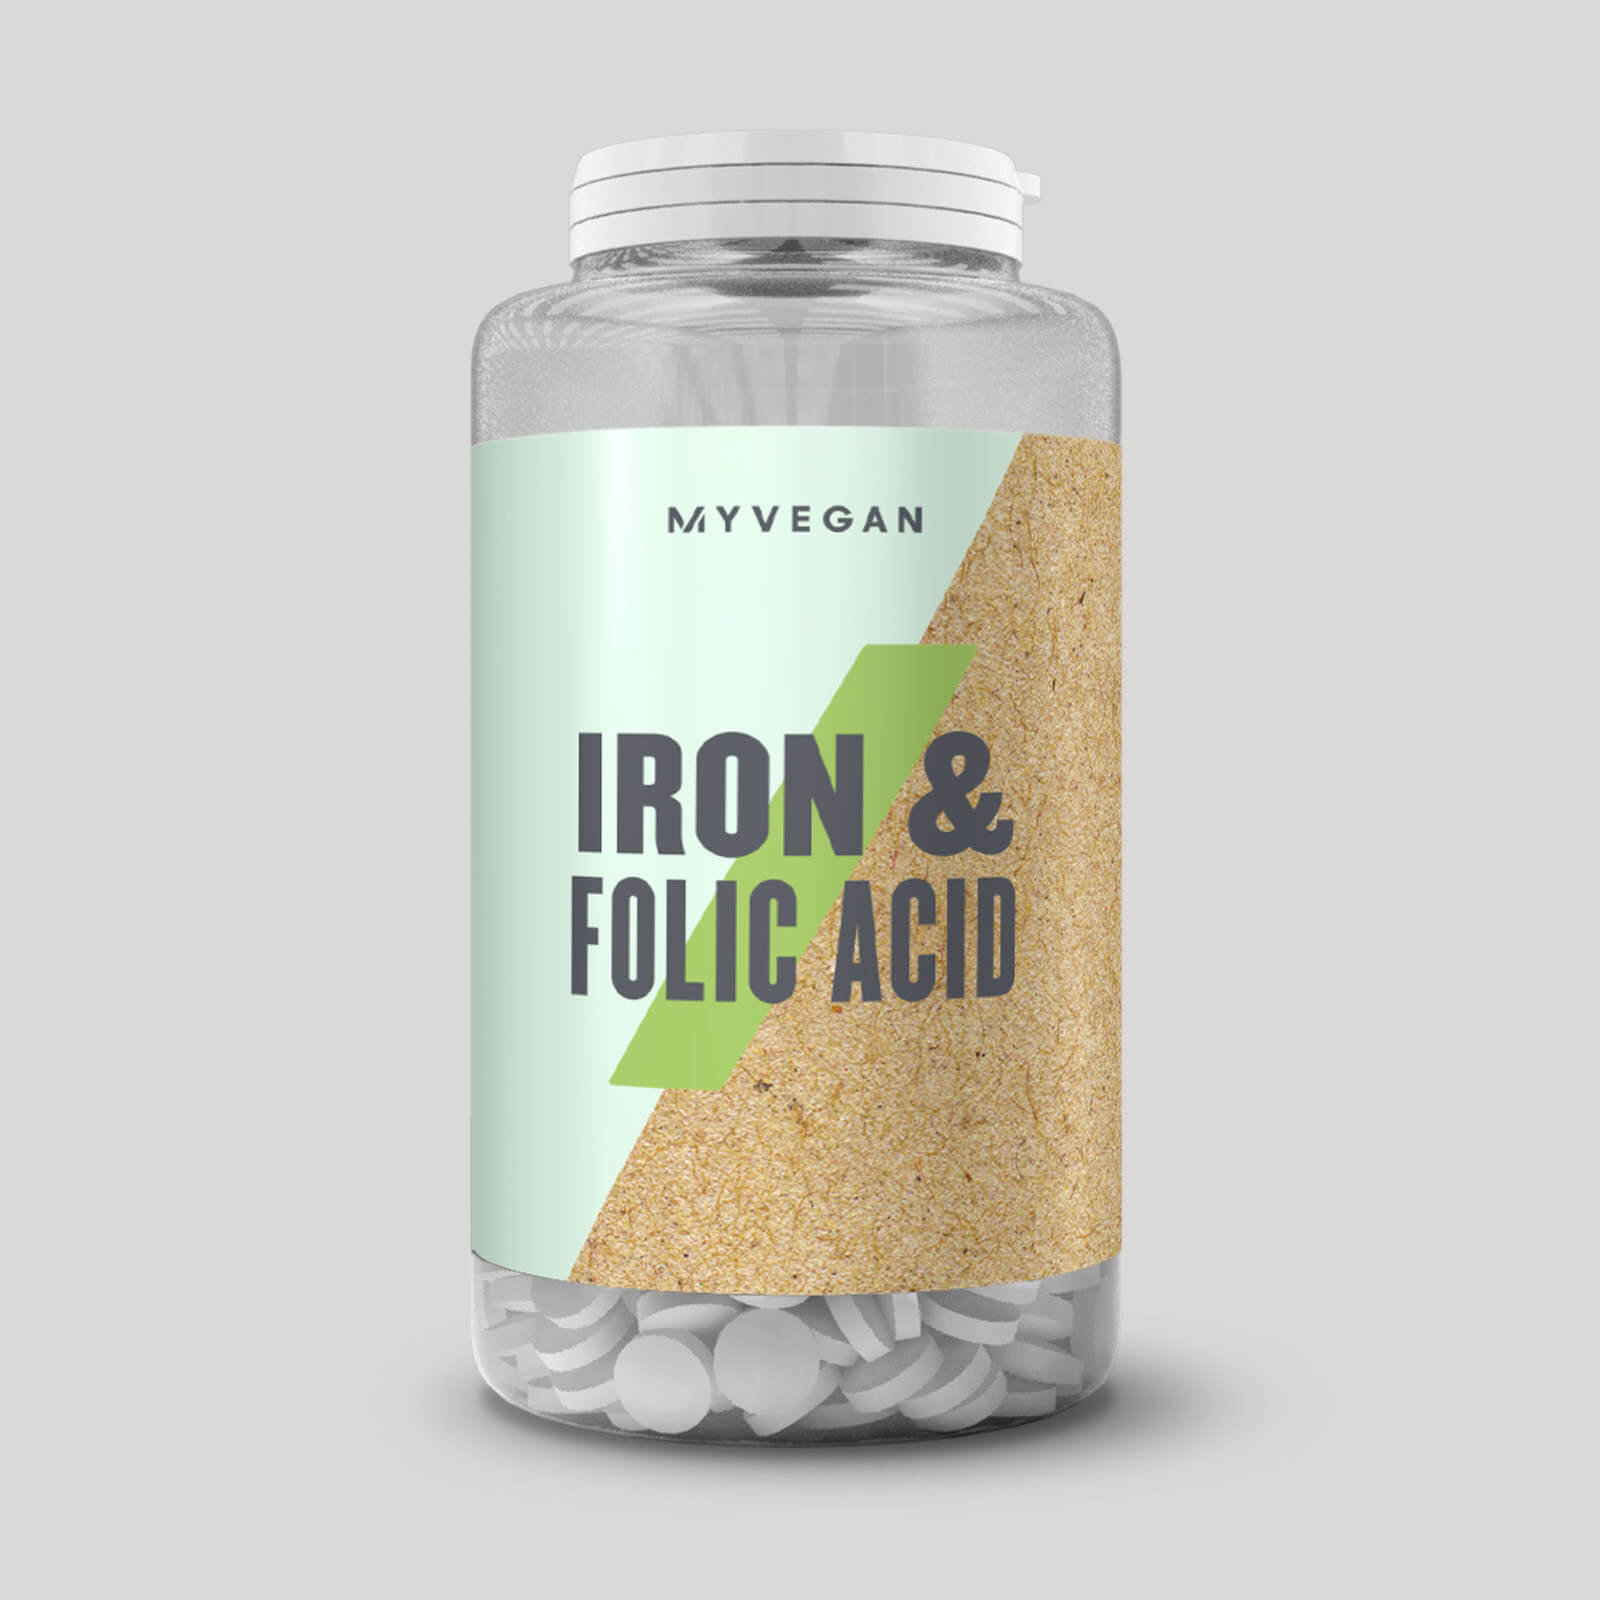 Vegan Iron & Folic Acid Supplement - 90Tablets